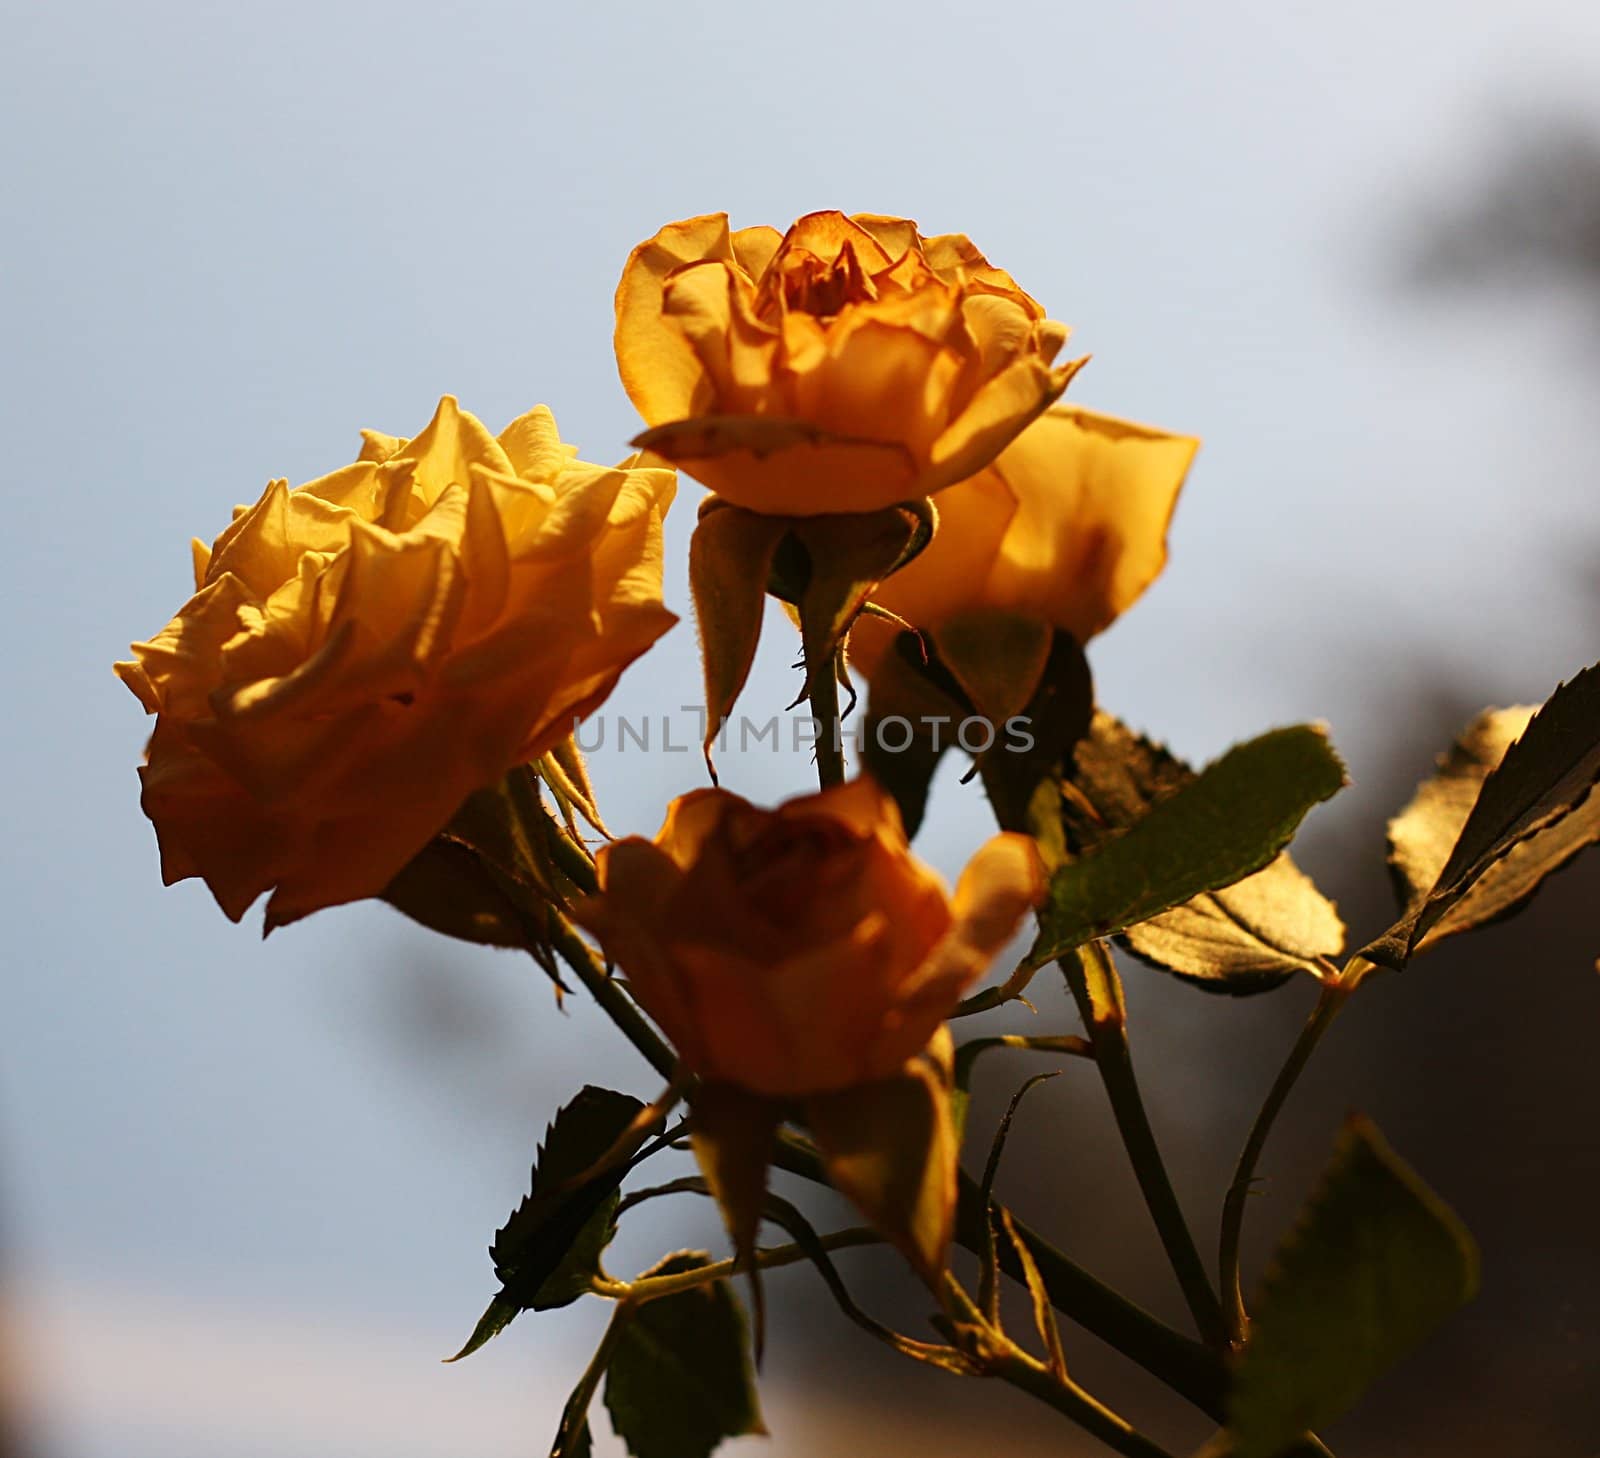 Yellow roses in warm evening sun by sundaune